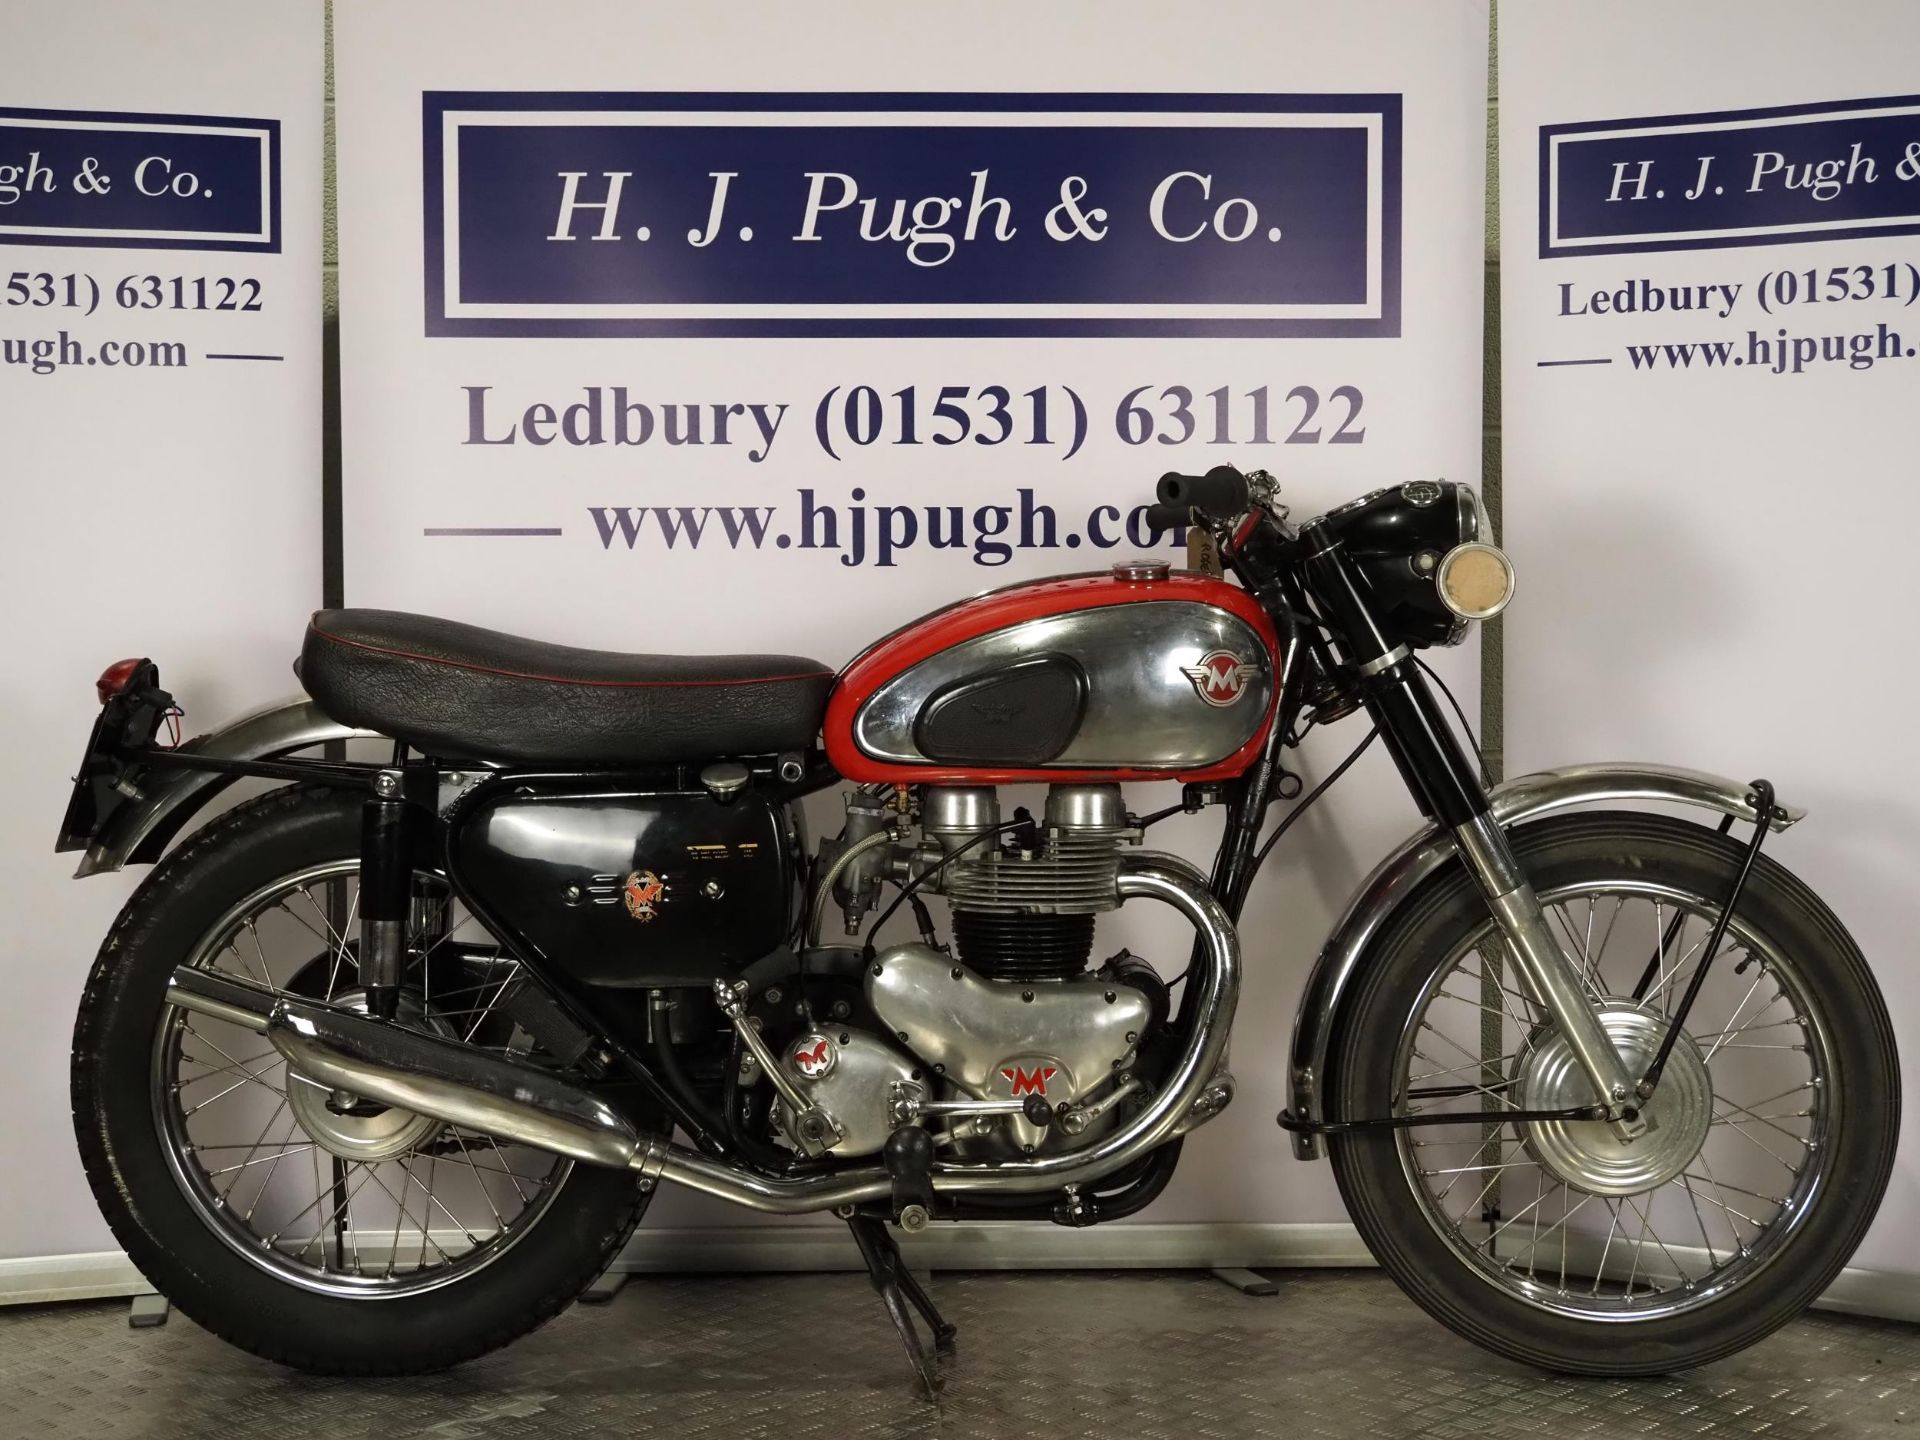 Matchless CSR650 motorcycle. 1960. 650cc. Frame No. 73603 Engine No. G12CSX2823 Was last ridden in